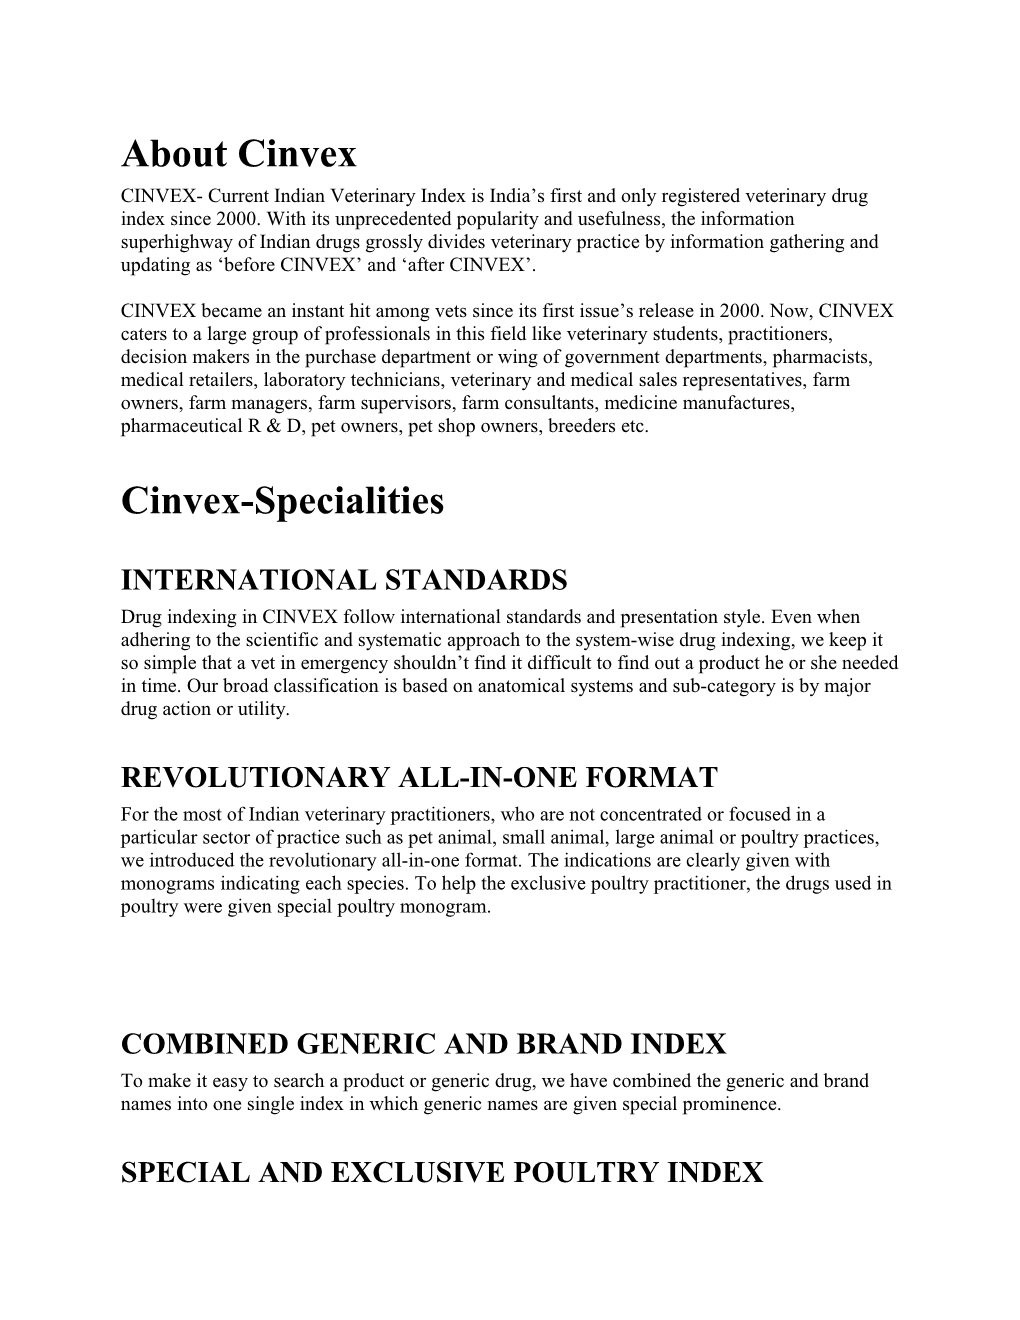 Cinvex-Specialities